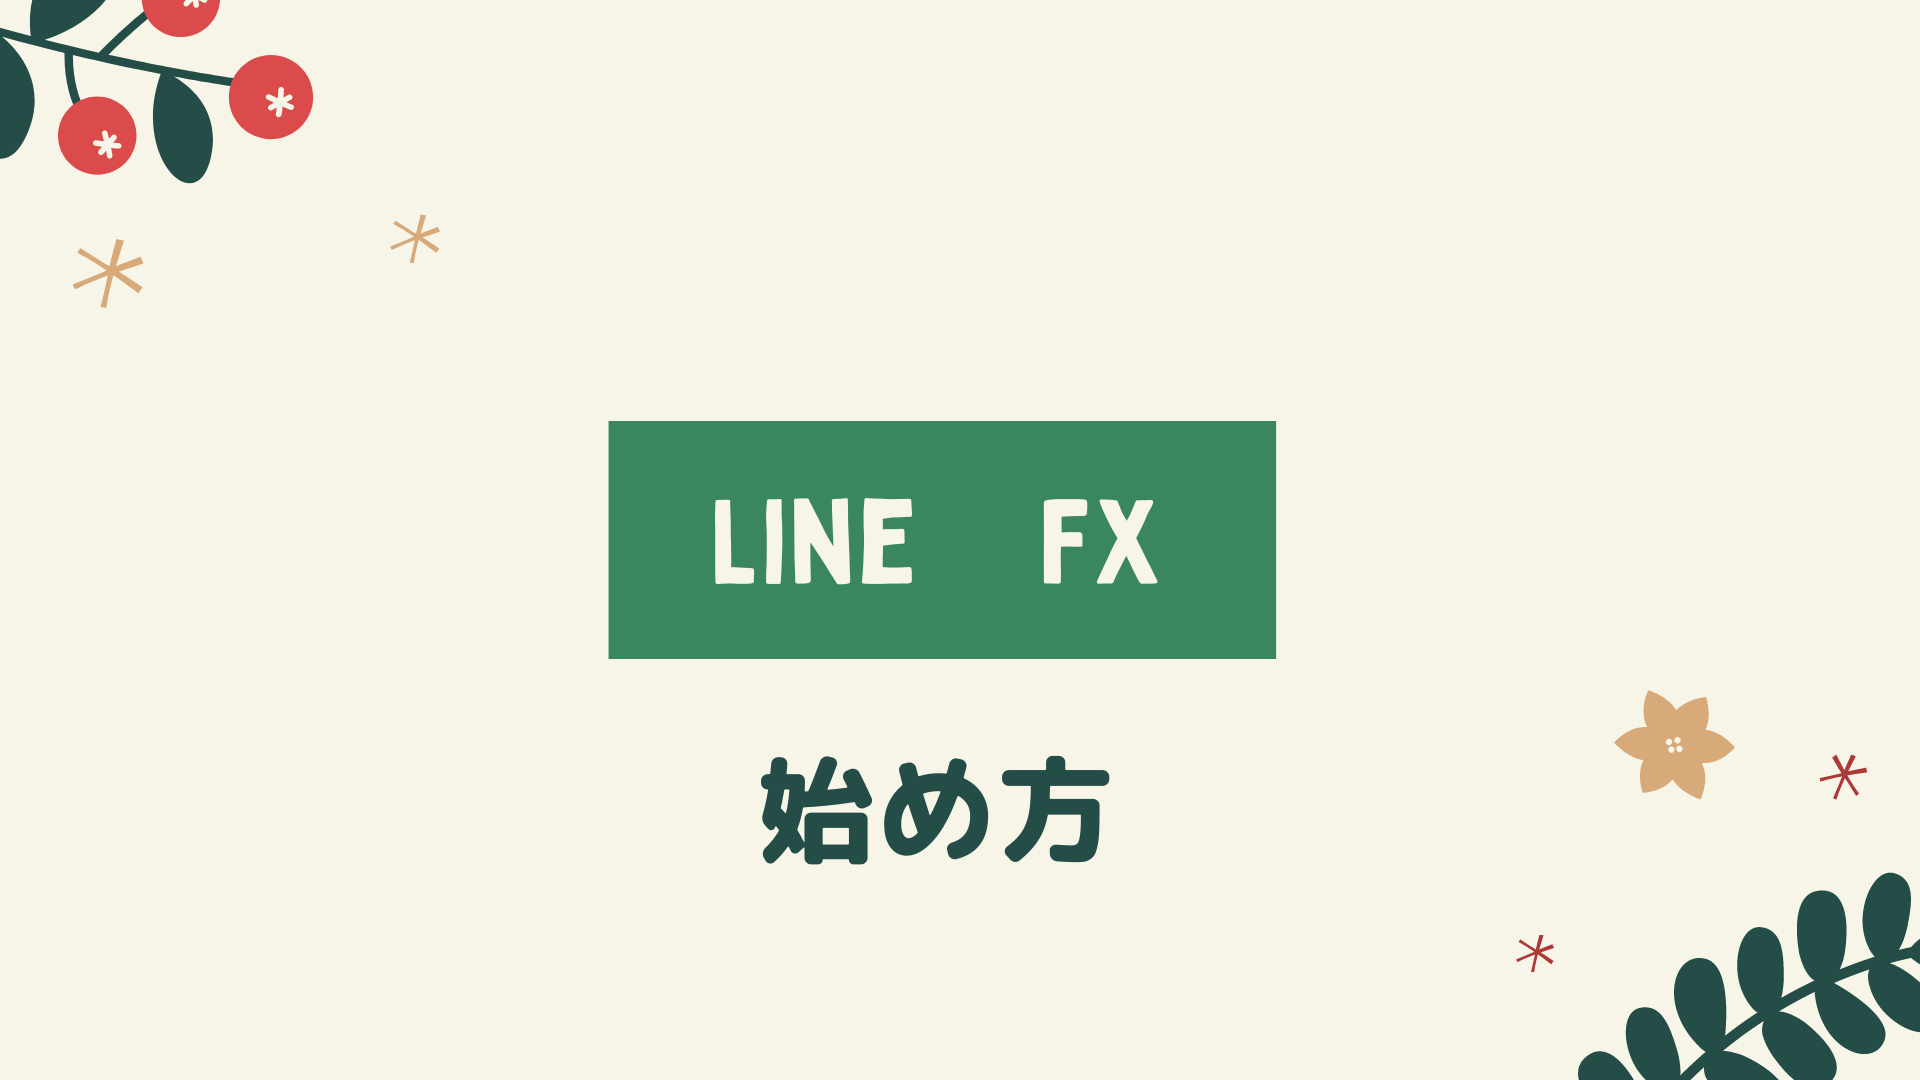 LINE FX始め方